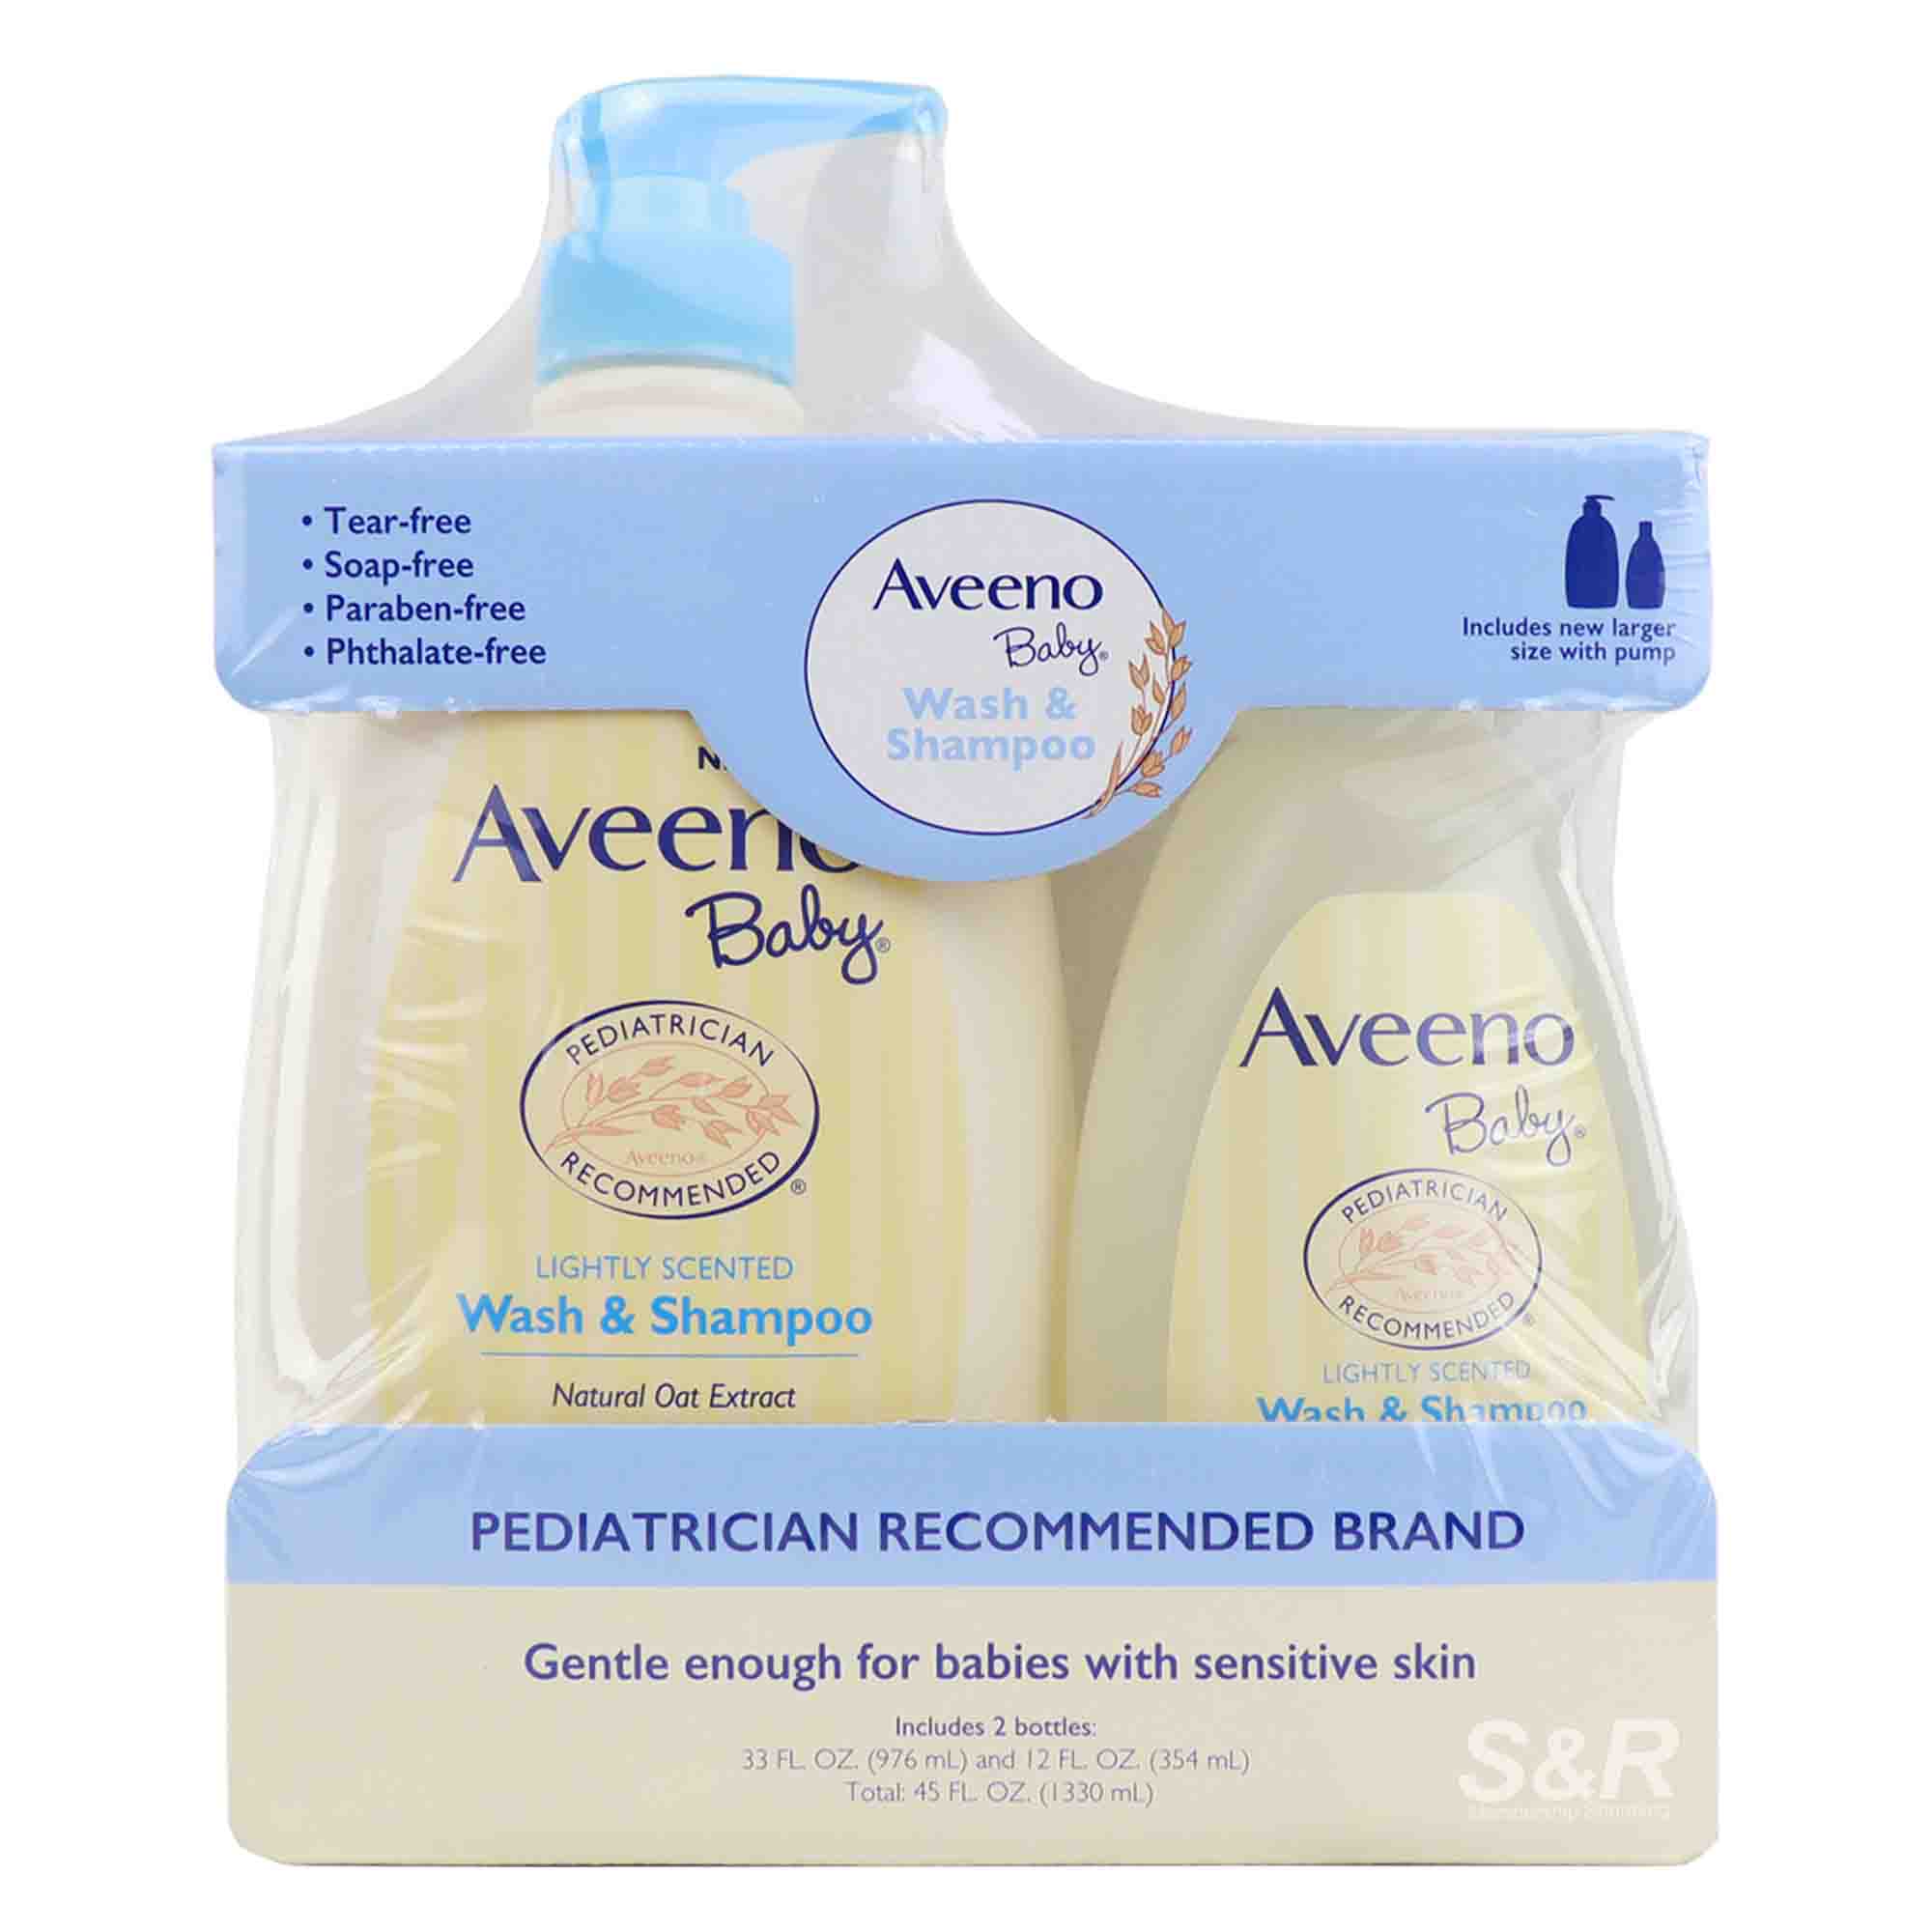 Aveeno Baby Body Wash and Shampoo 2 bottles